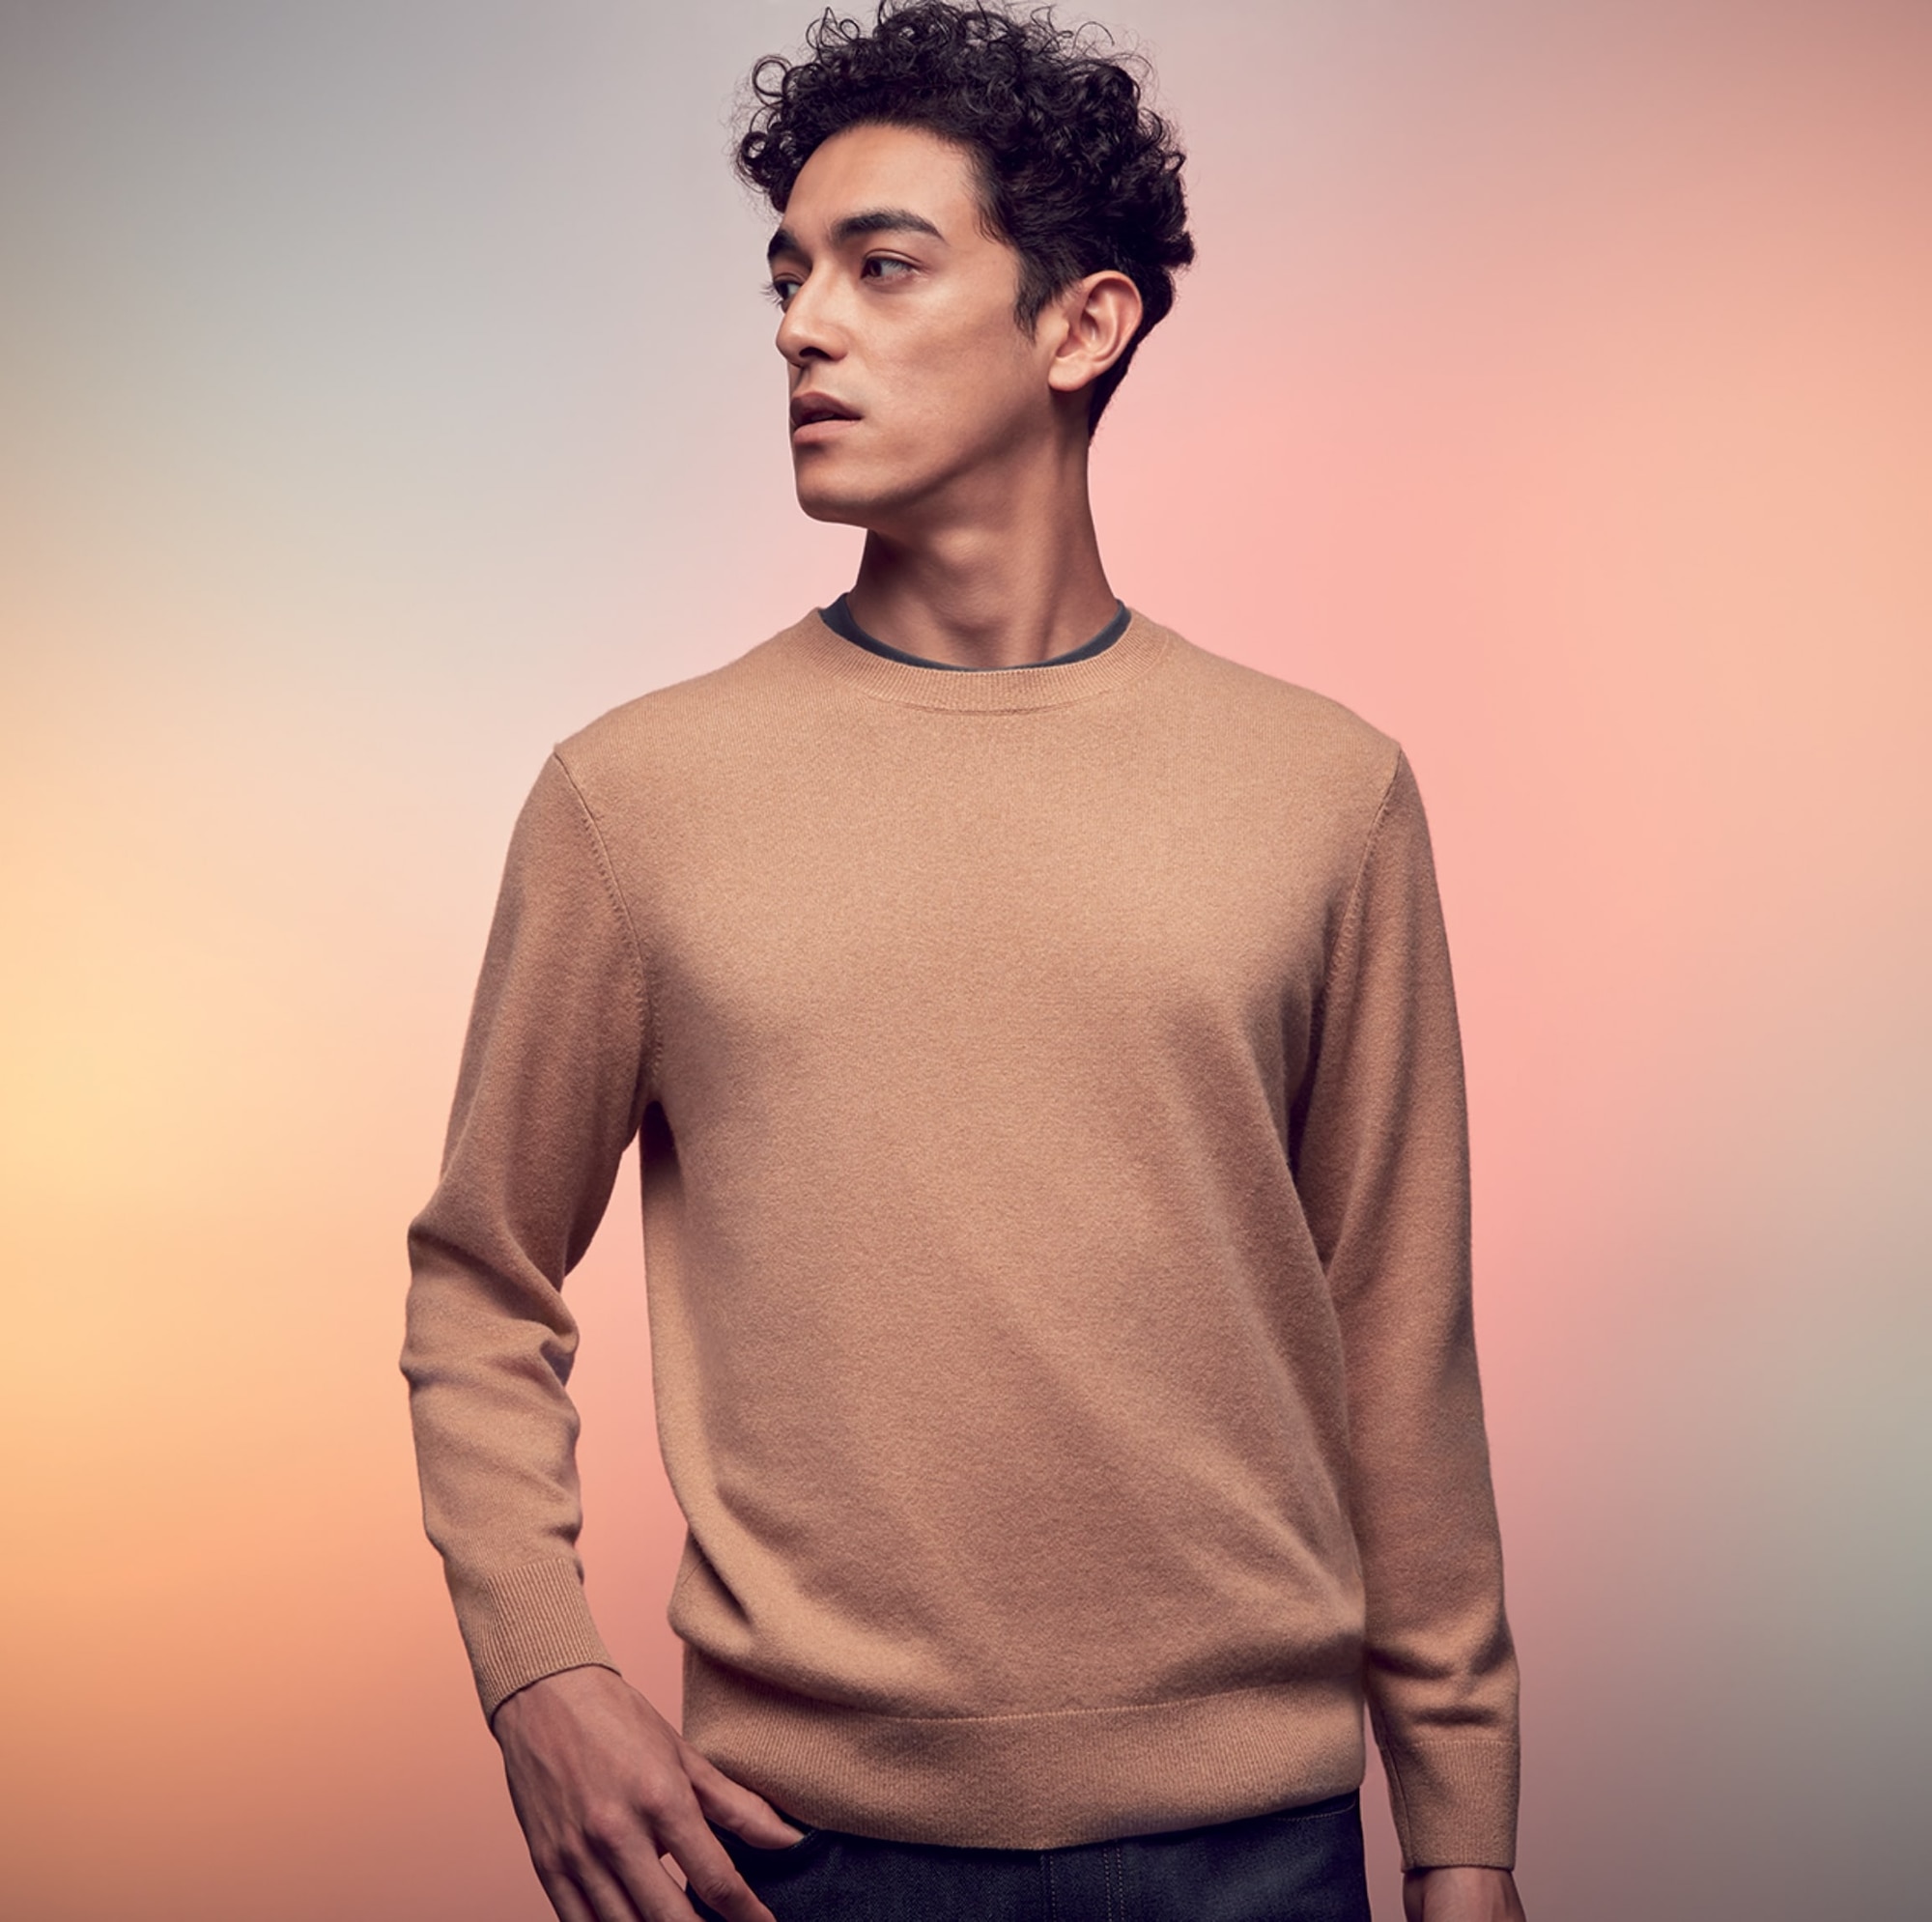 Men's V Neck Sweater Soft Jumper Pullover Uniform Premium Smart Casual Designer 